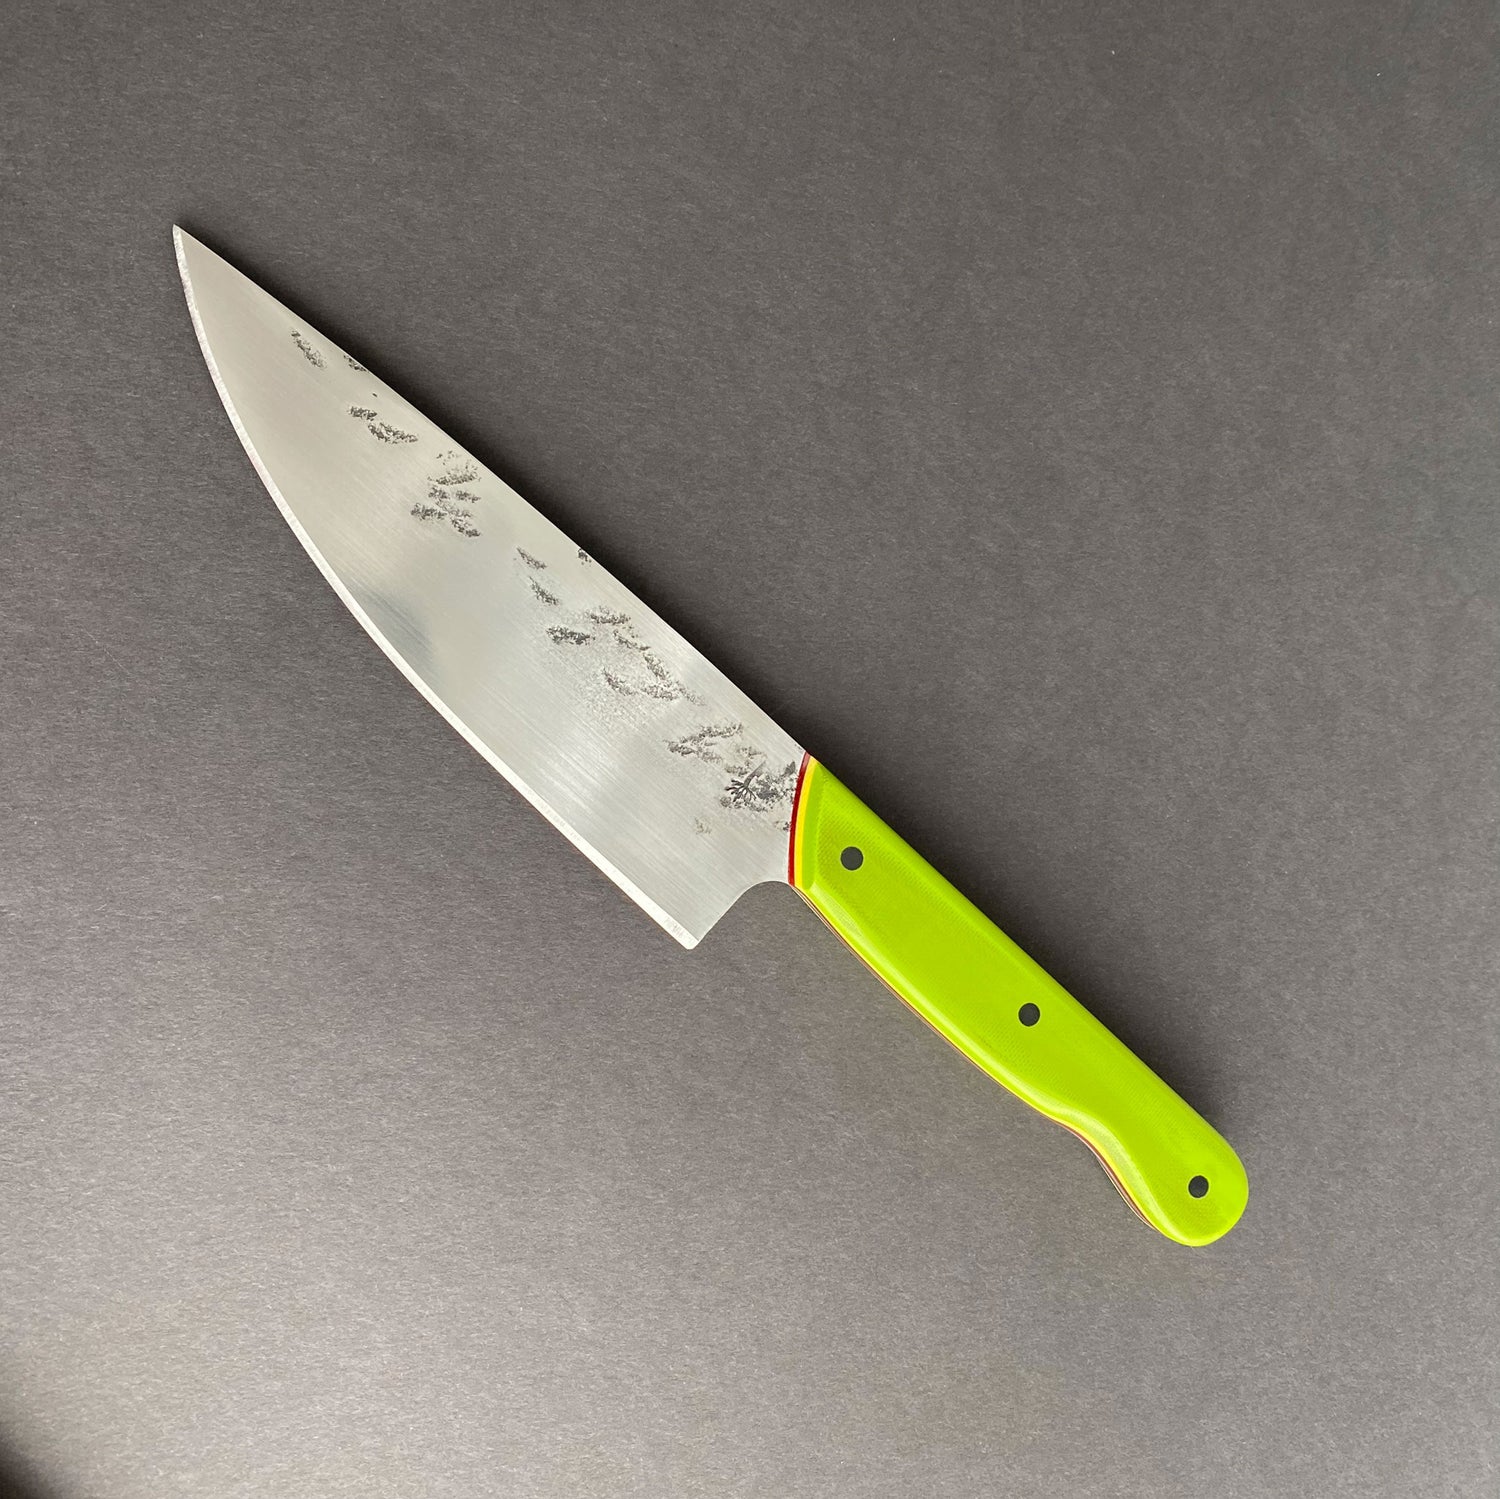 Skarpari Knives - Available